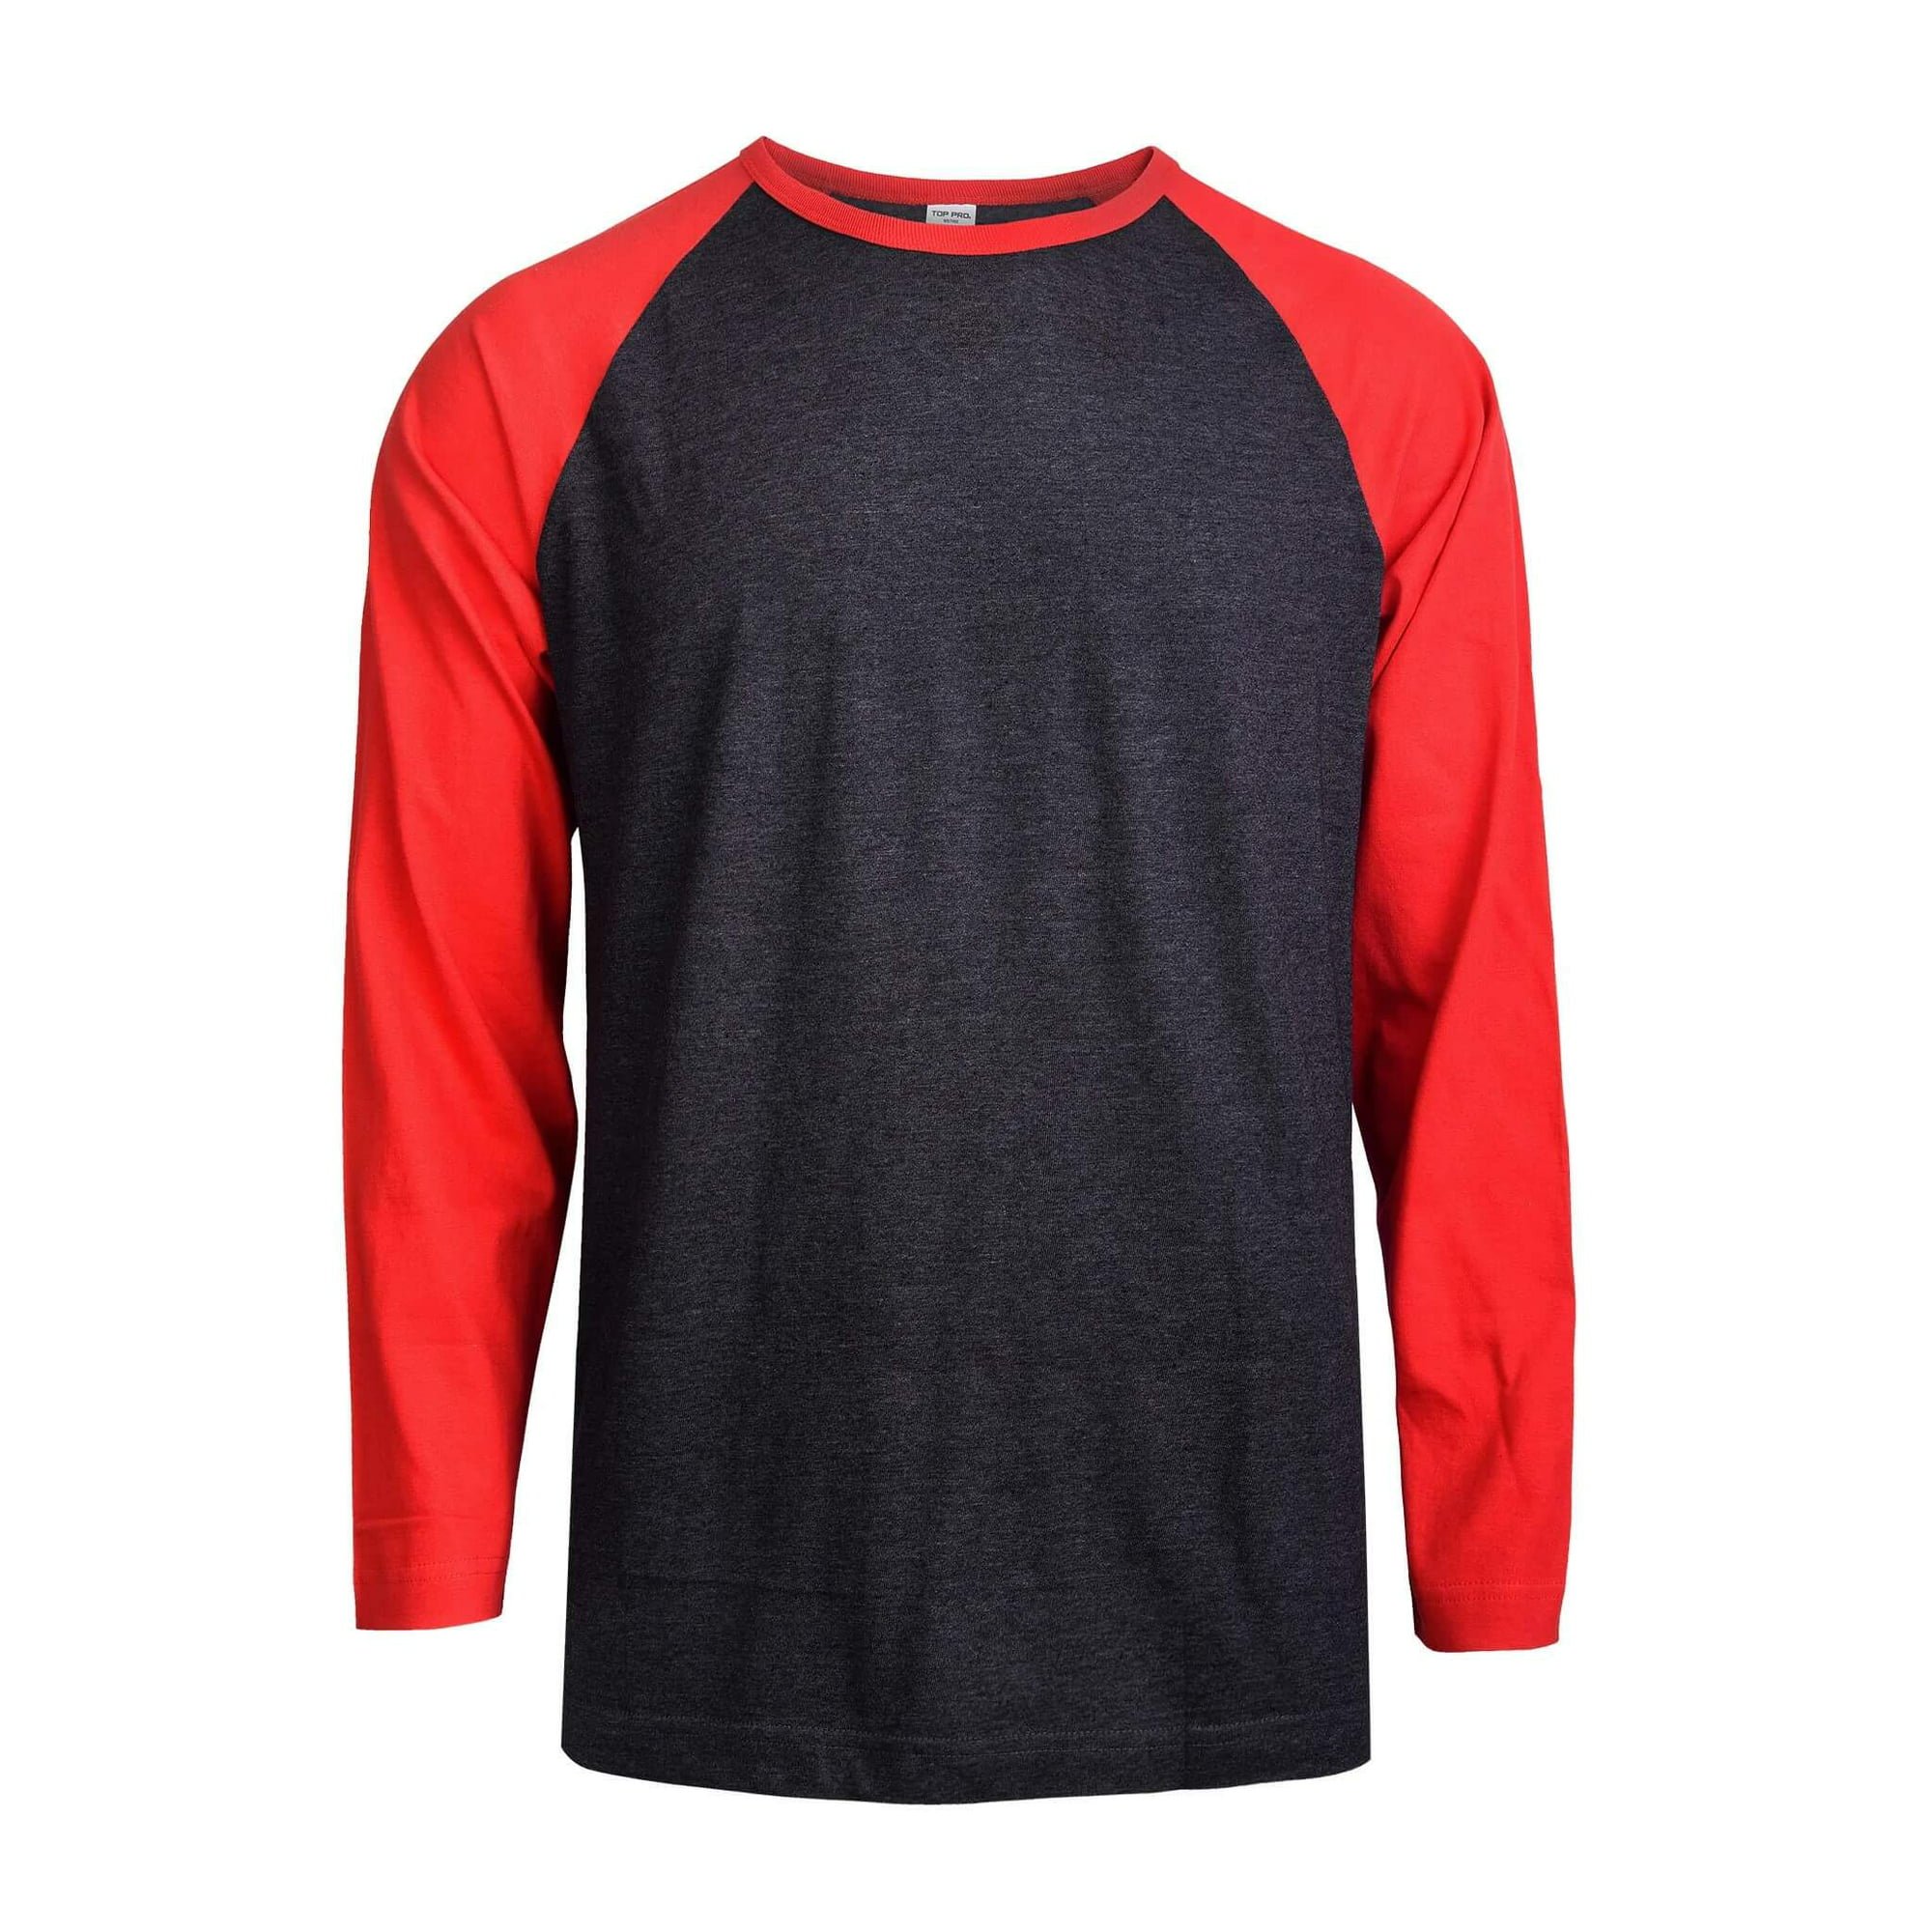 Men's Long Sleeve Crew Neck Baseball Shirt, Casual Dynamic Cotton Raglan T  Shirts, Red/Charcoal Gray S, 1 Count, 1 Pack